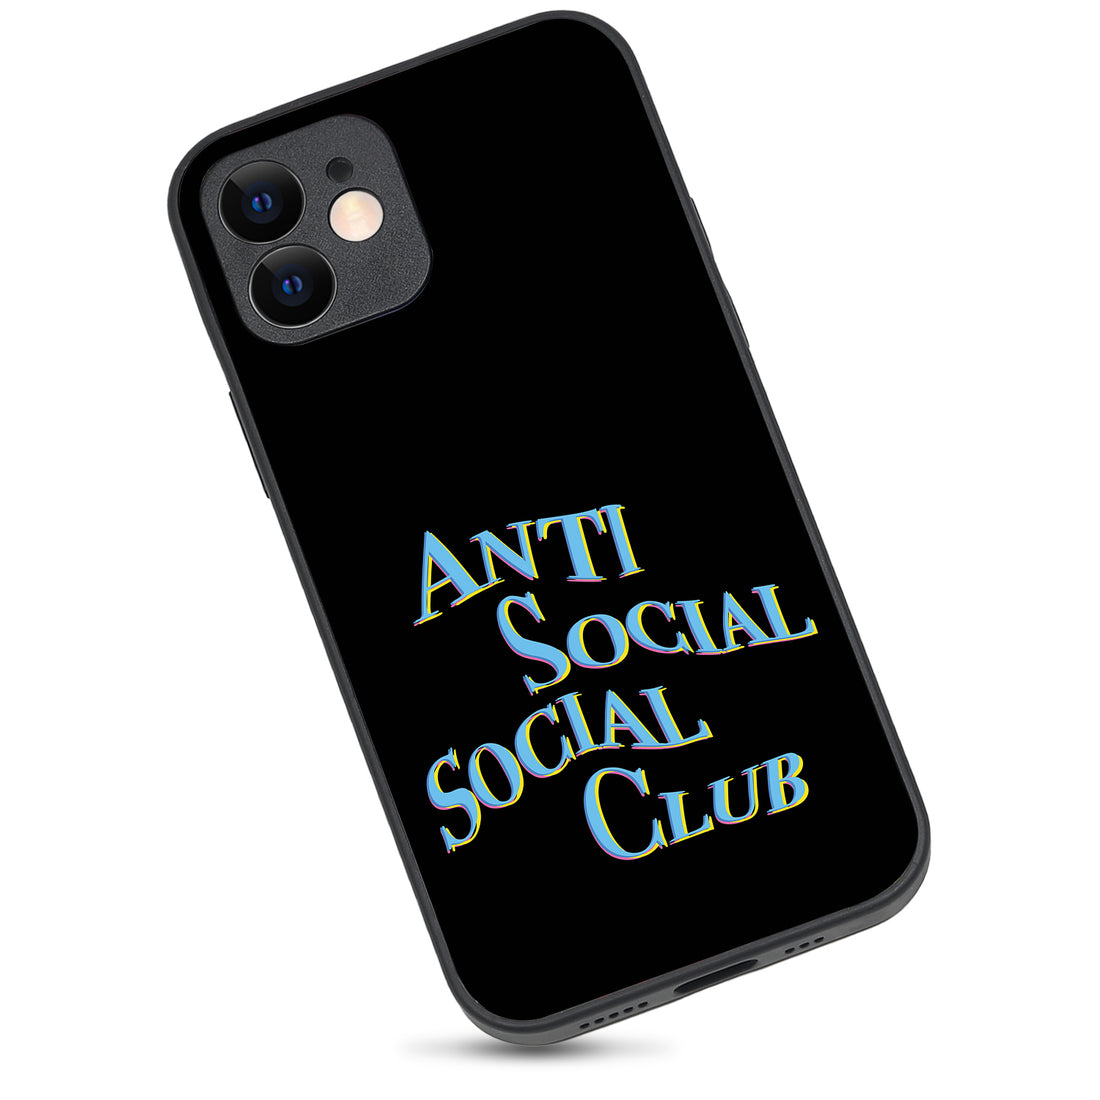 Social Club Black Motivational Quotes iPhone 12 Case